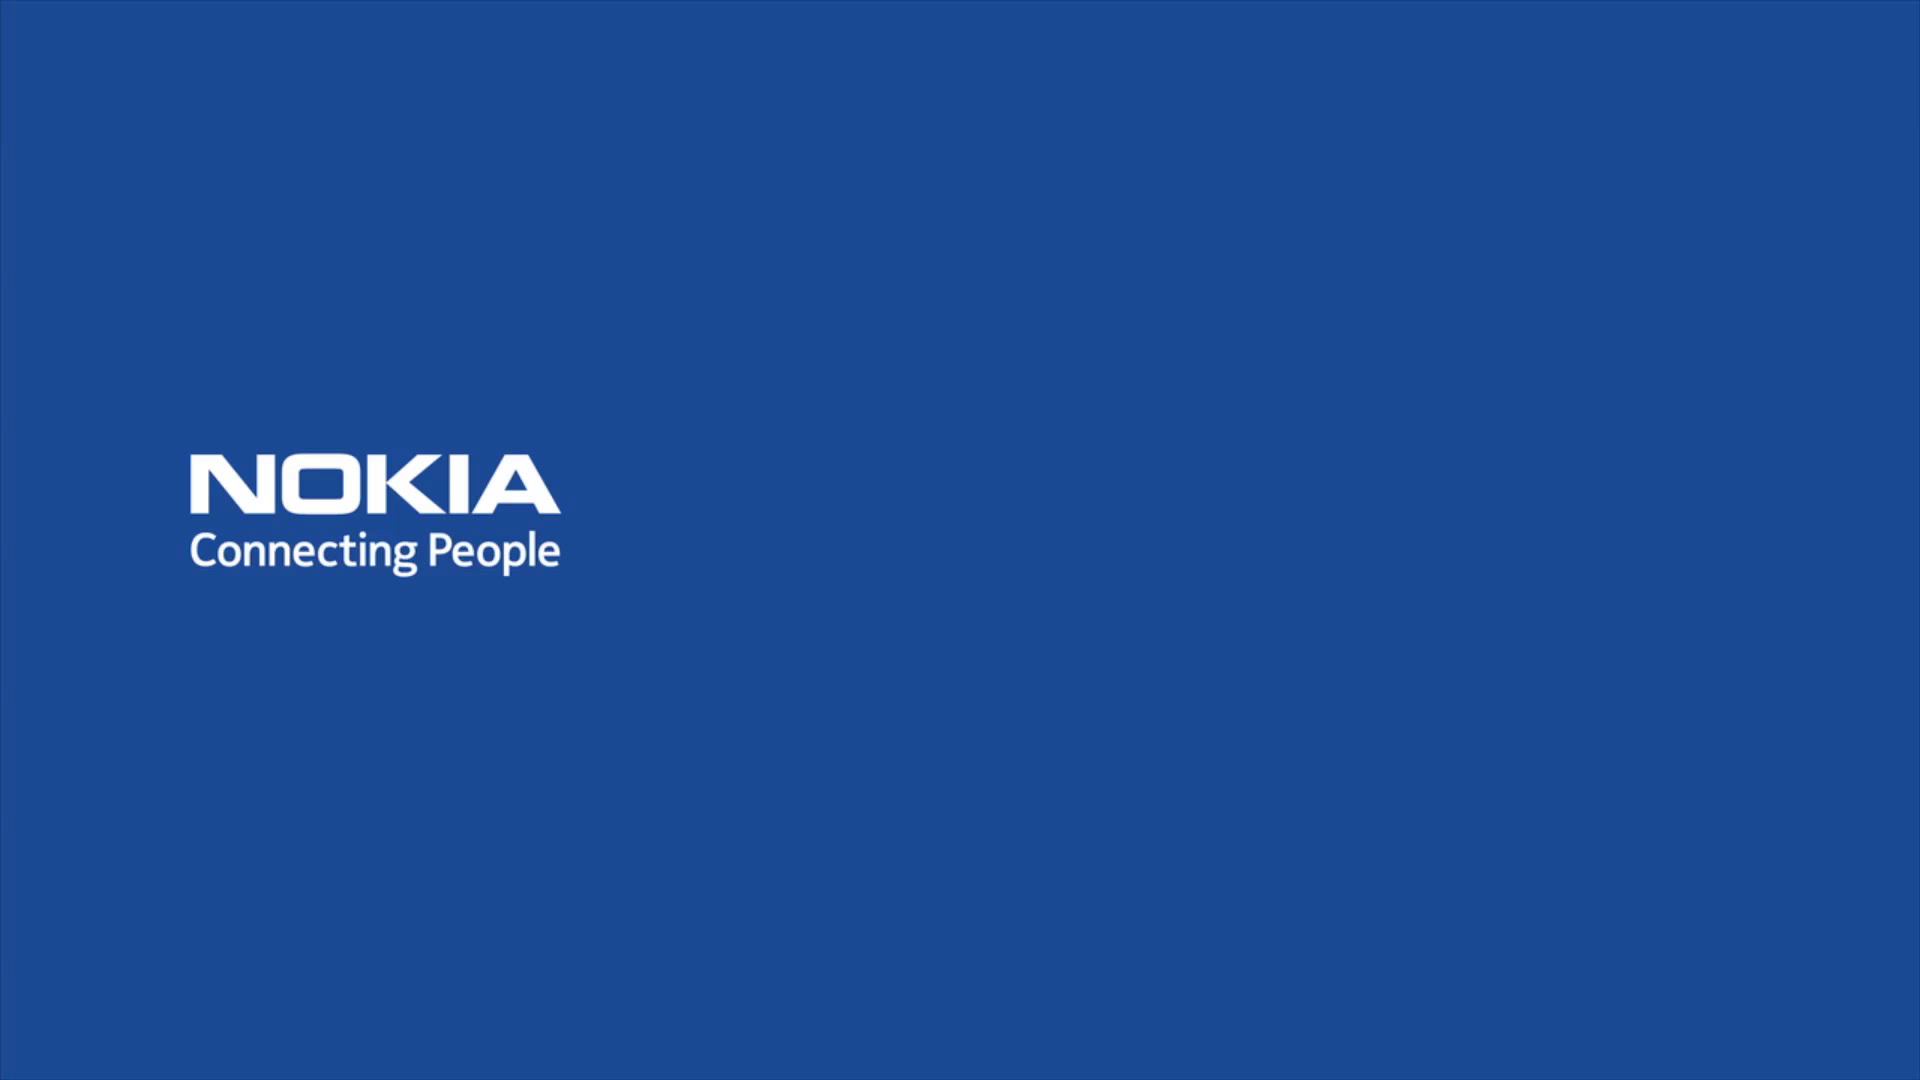 Обои на телефон нокиа. Nokia. Nokia заставка. Нокиа логотип. Nokia заставка на телефон.